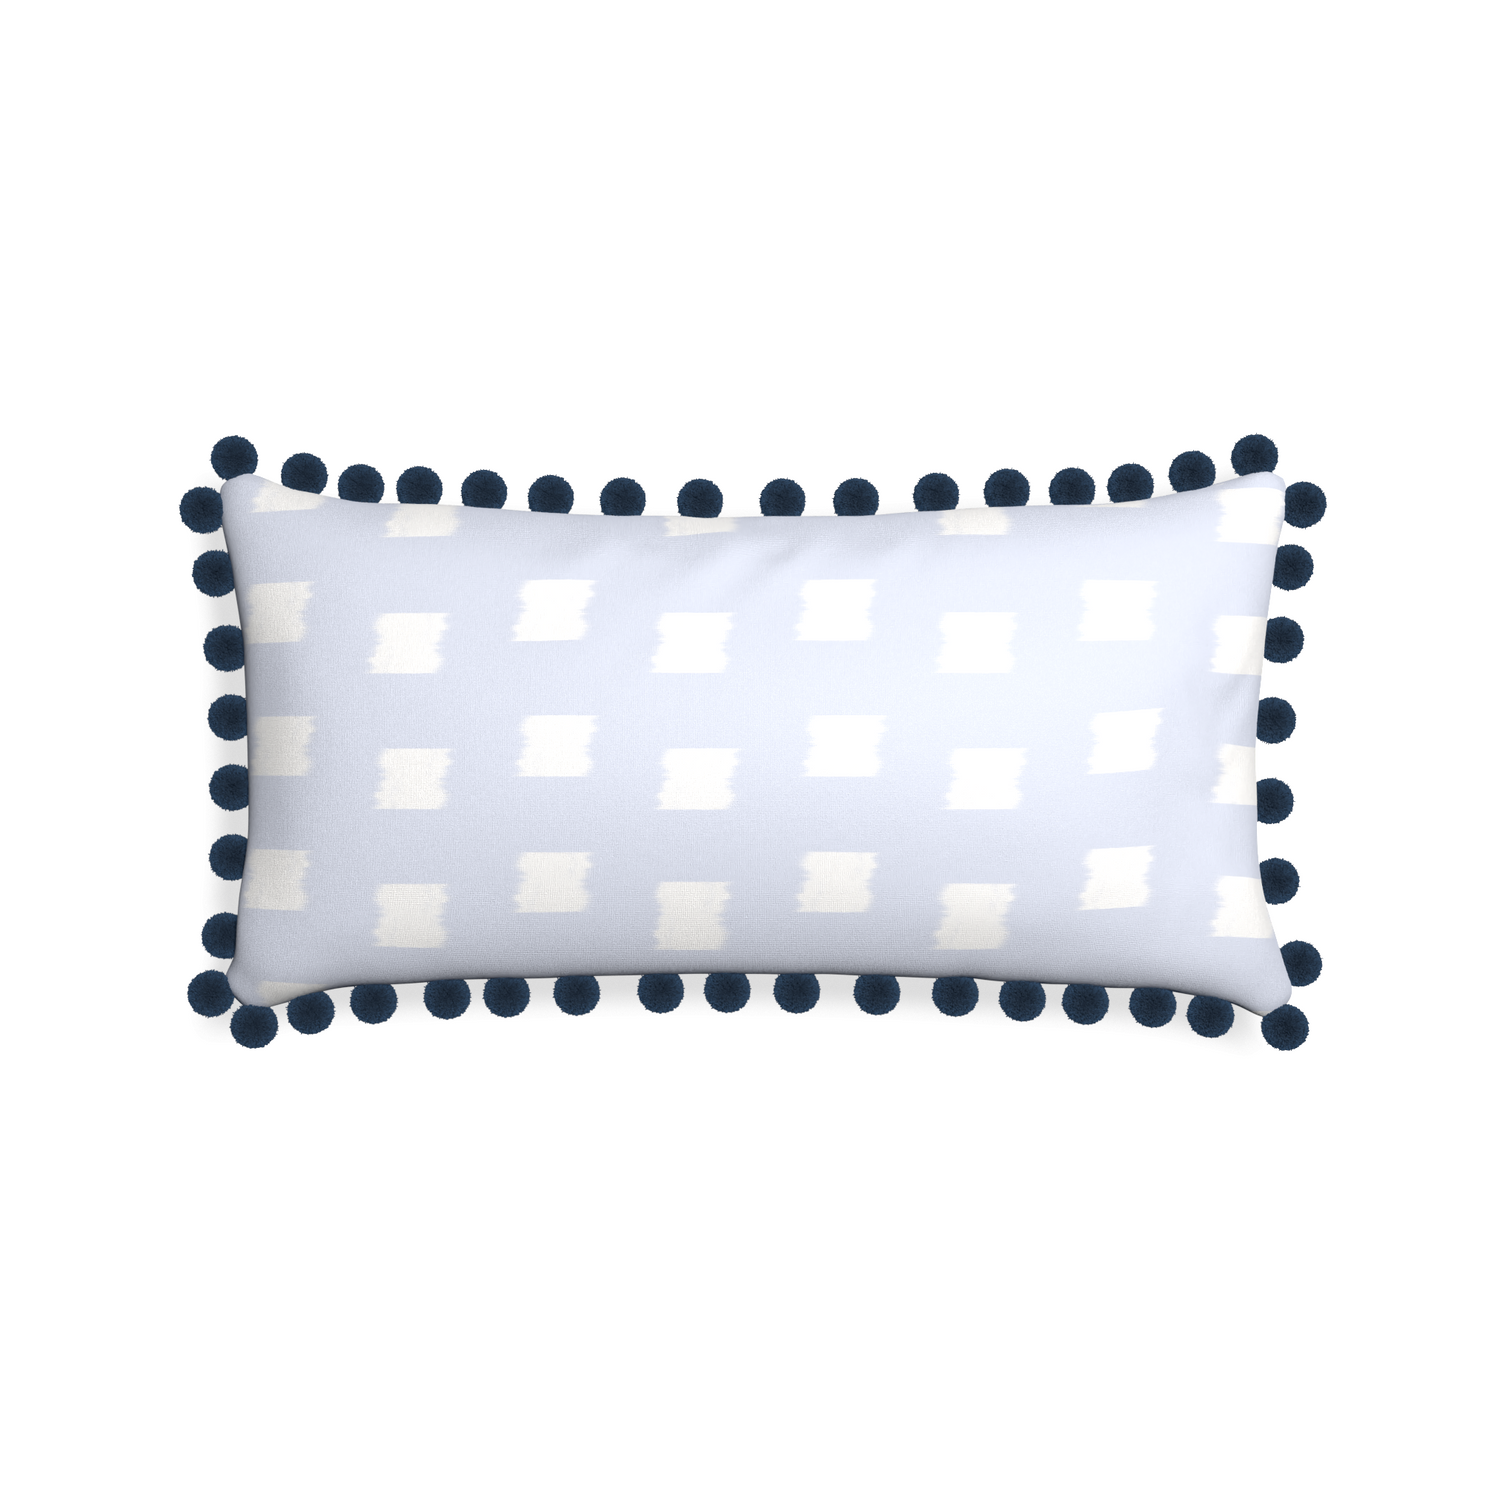 Midi-lumbar denton custom sky blue patternpillow with c on white background